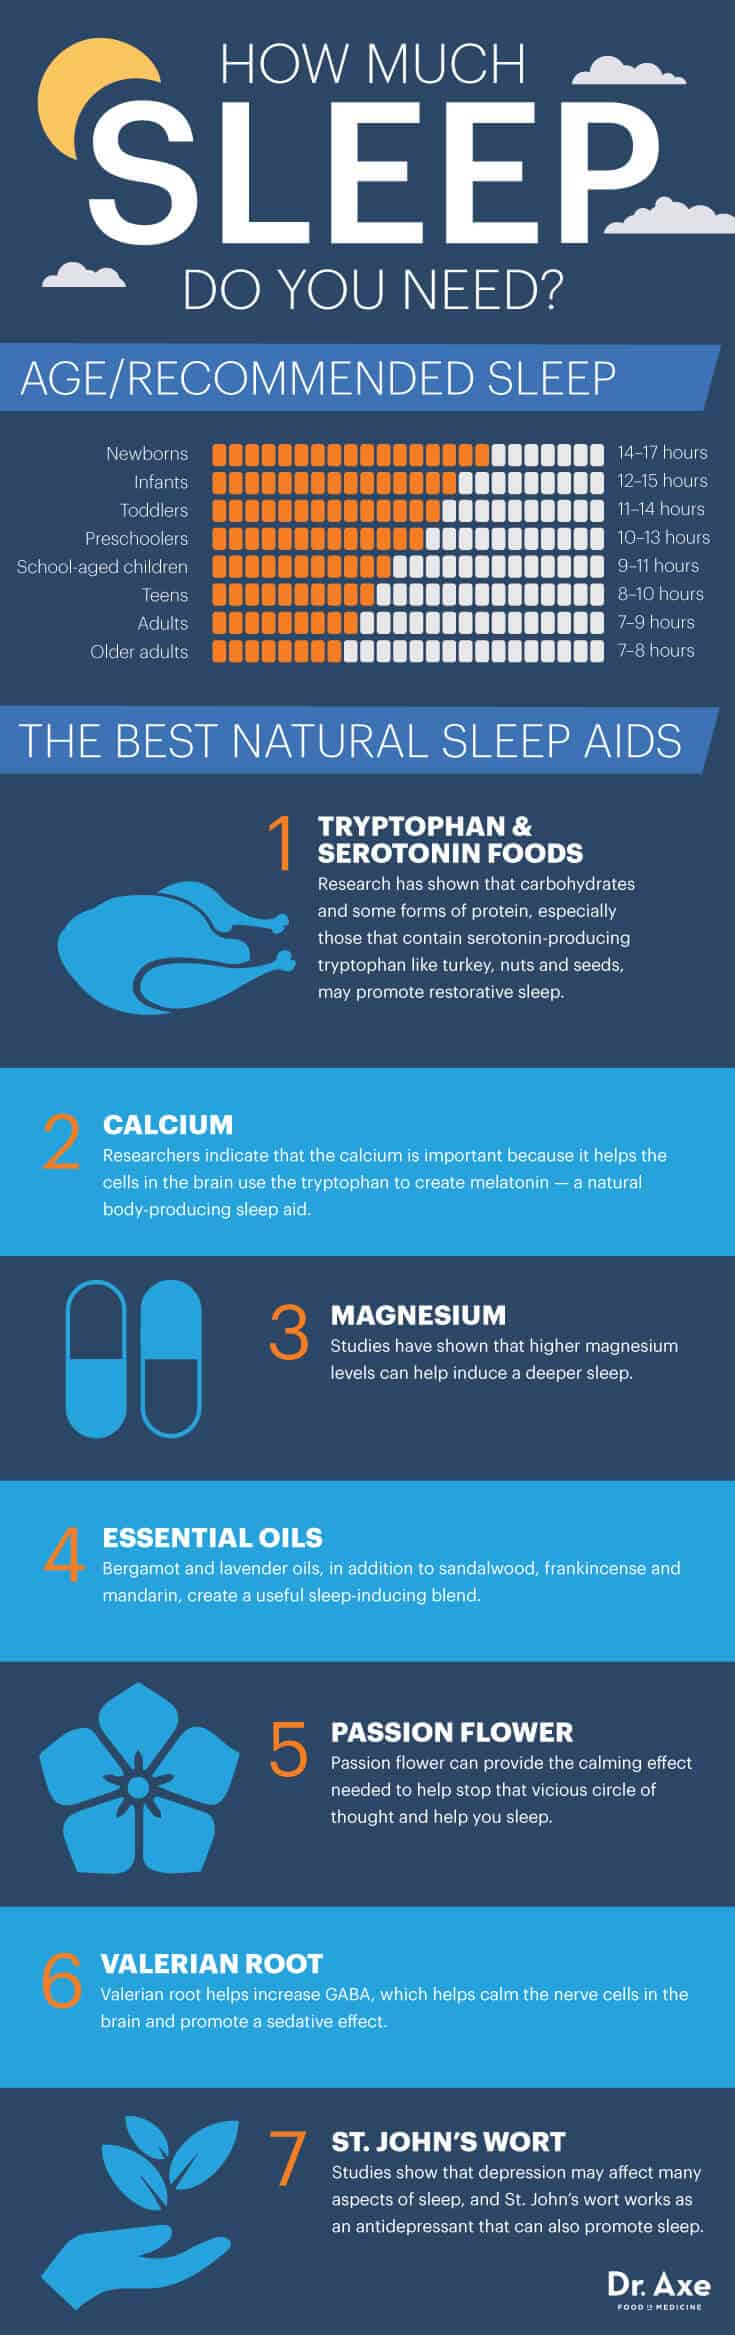 7 natural sleep aids that work to improve sleep & health - dr. axe